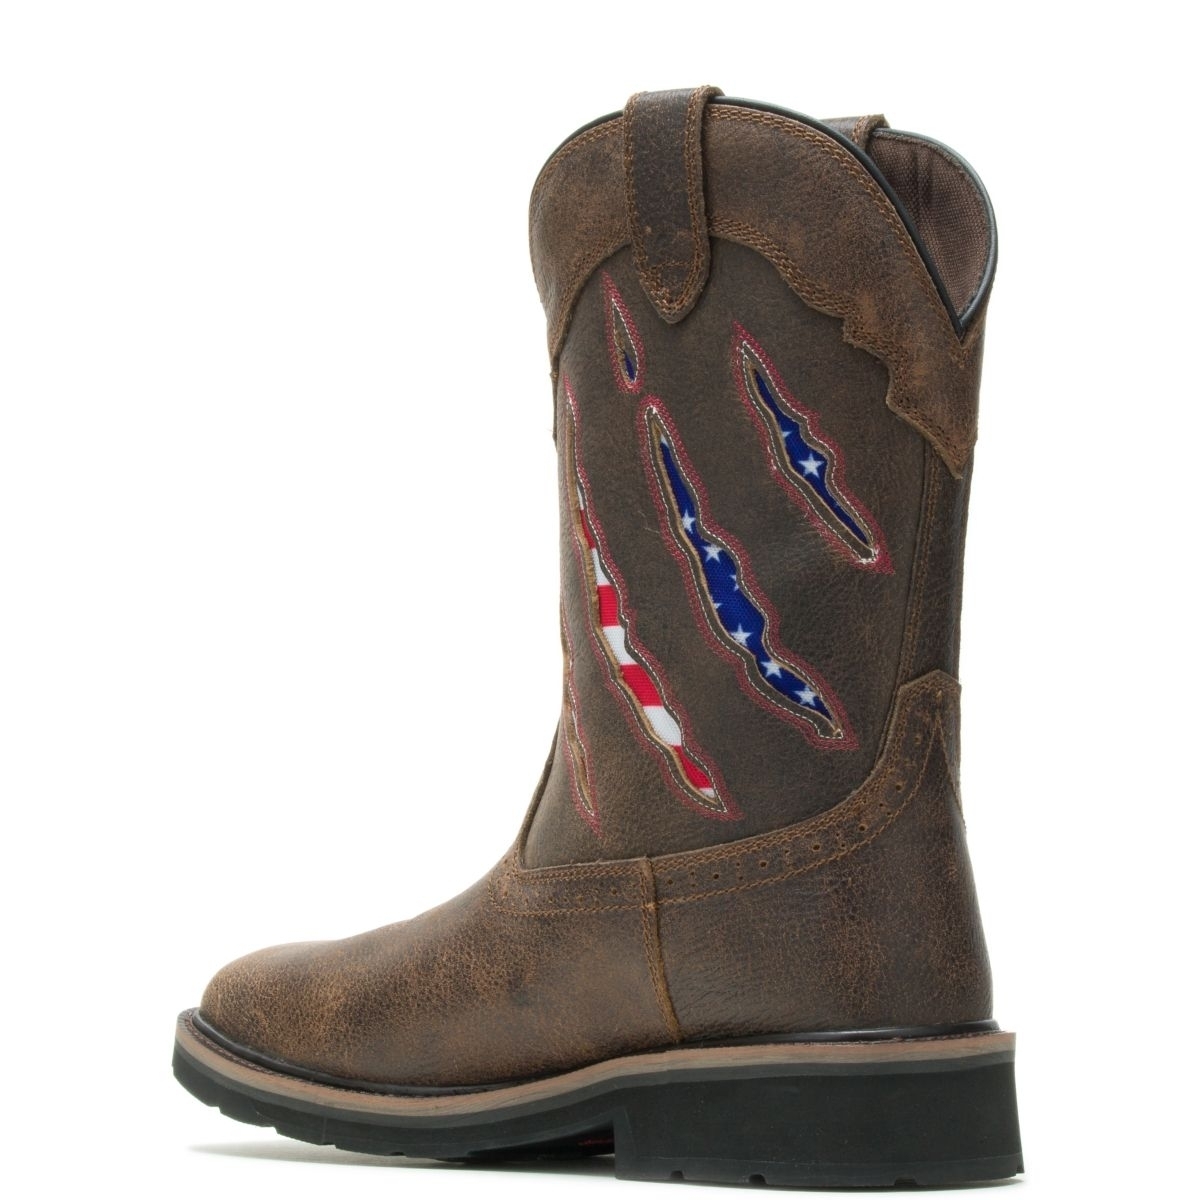 WOLVERINE Men's Rancher Claw Steel Toe Wellington Work Boot Brown/Flag - W201218 Flag/brown - Flag/brown, 10-W